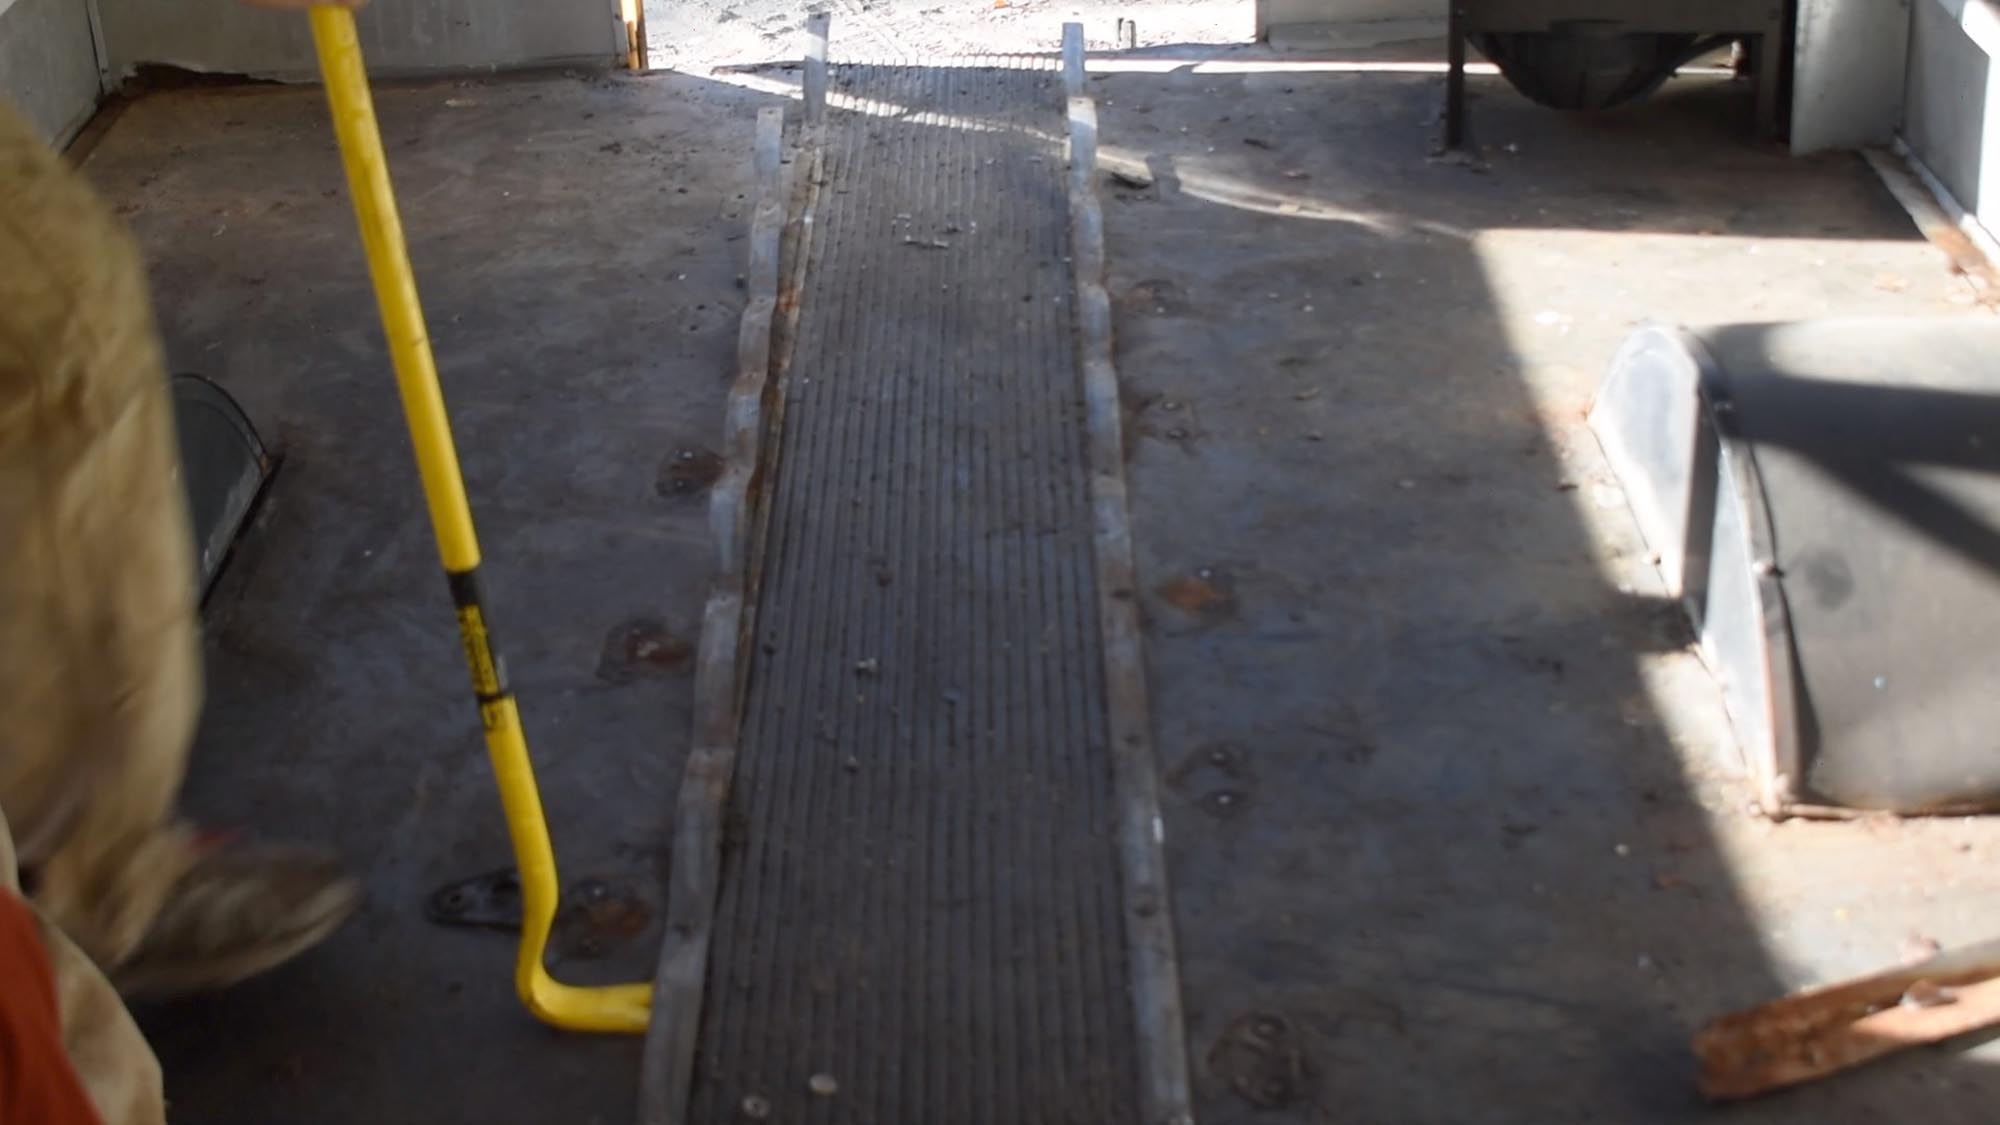 rip up metal strips from school bus floor